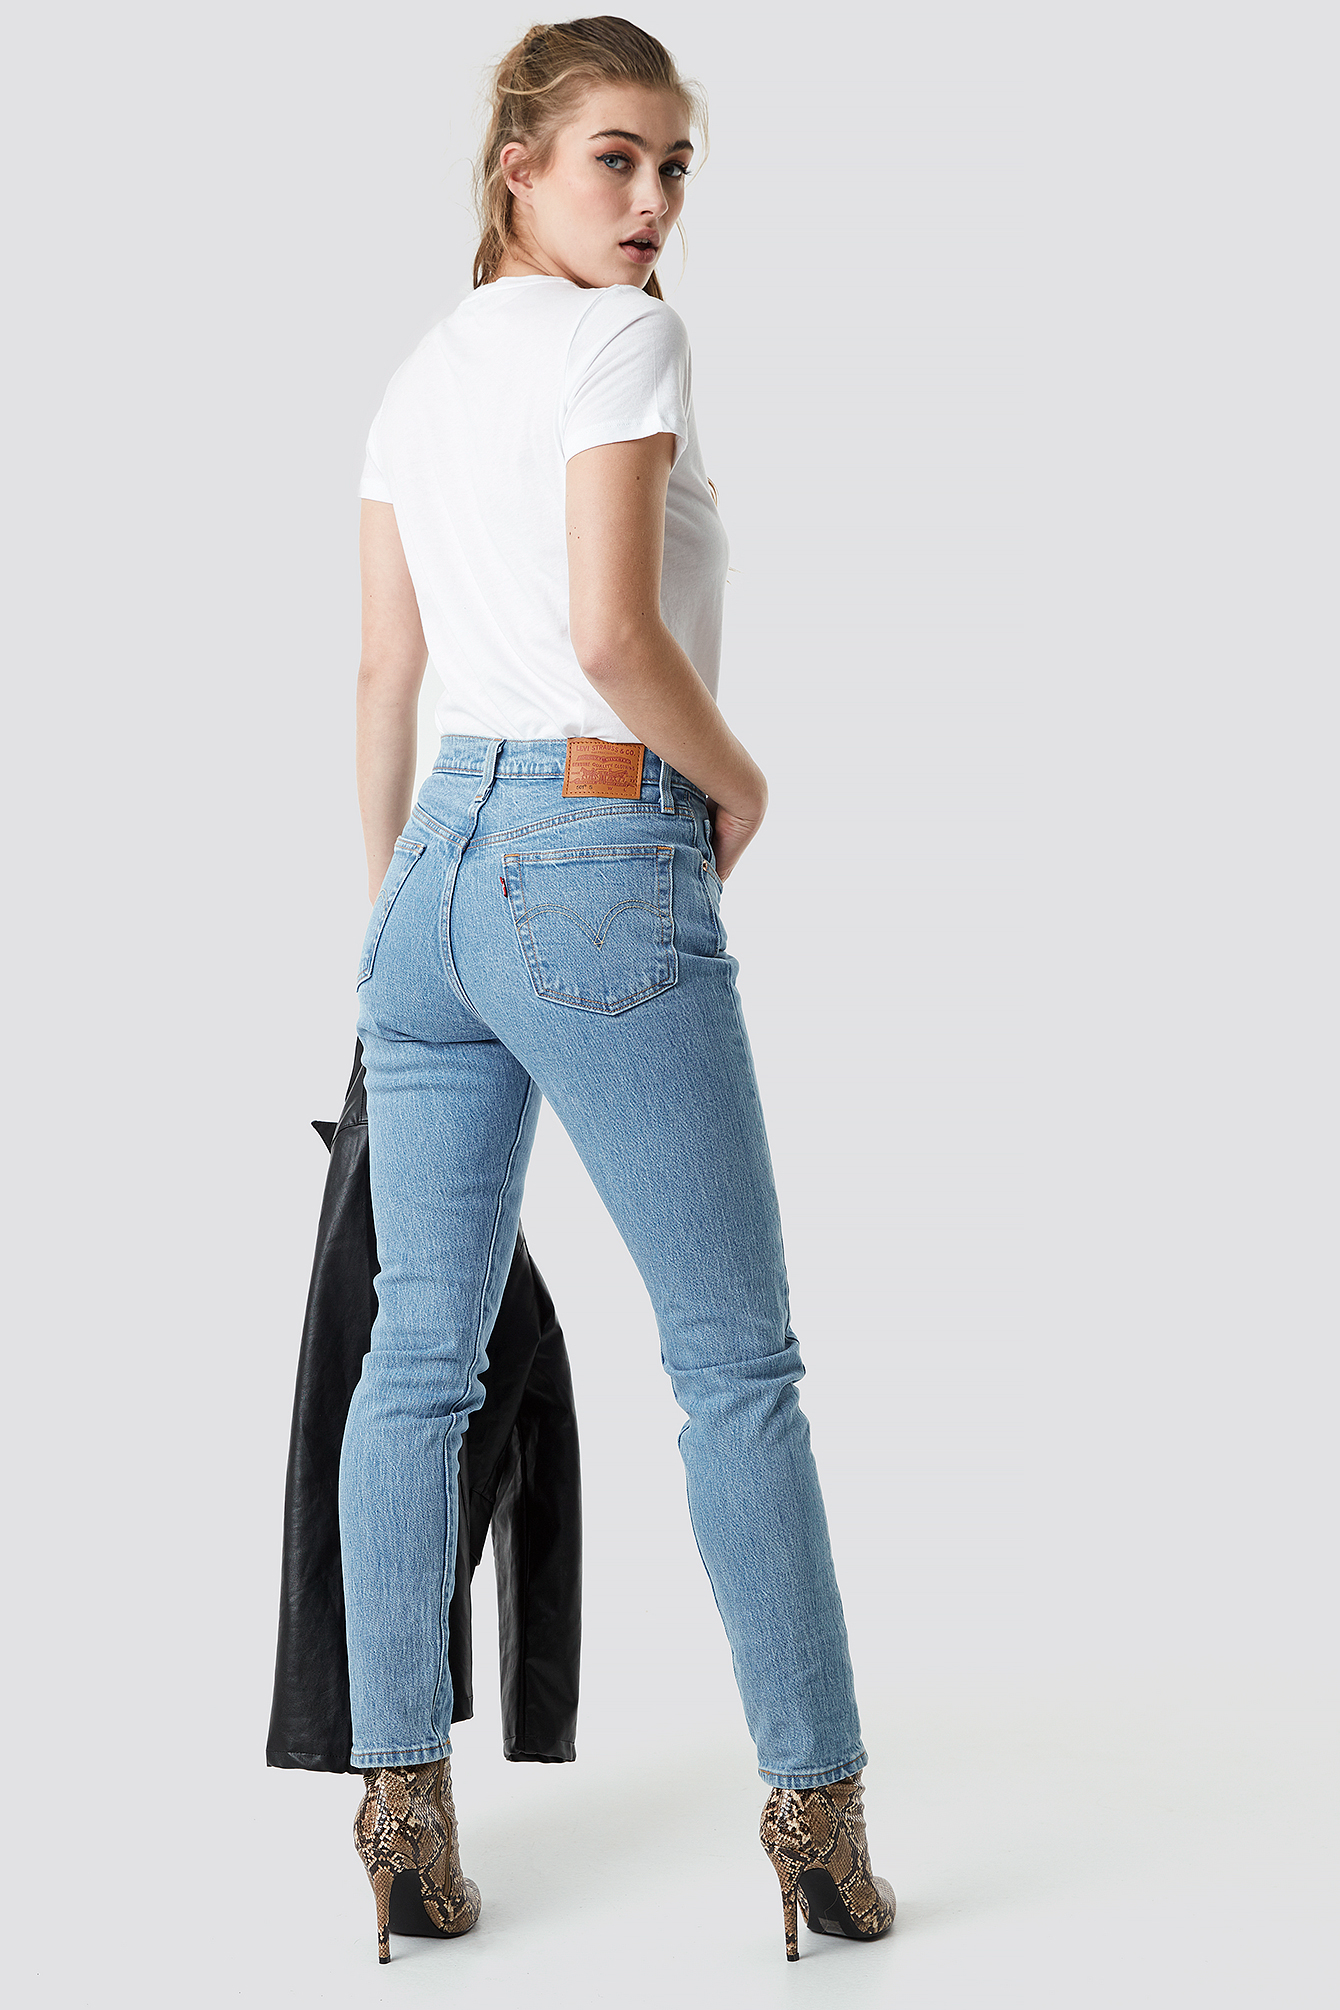 levis 501 skinny jeans